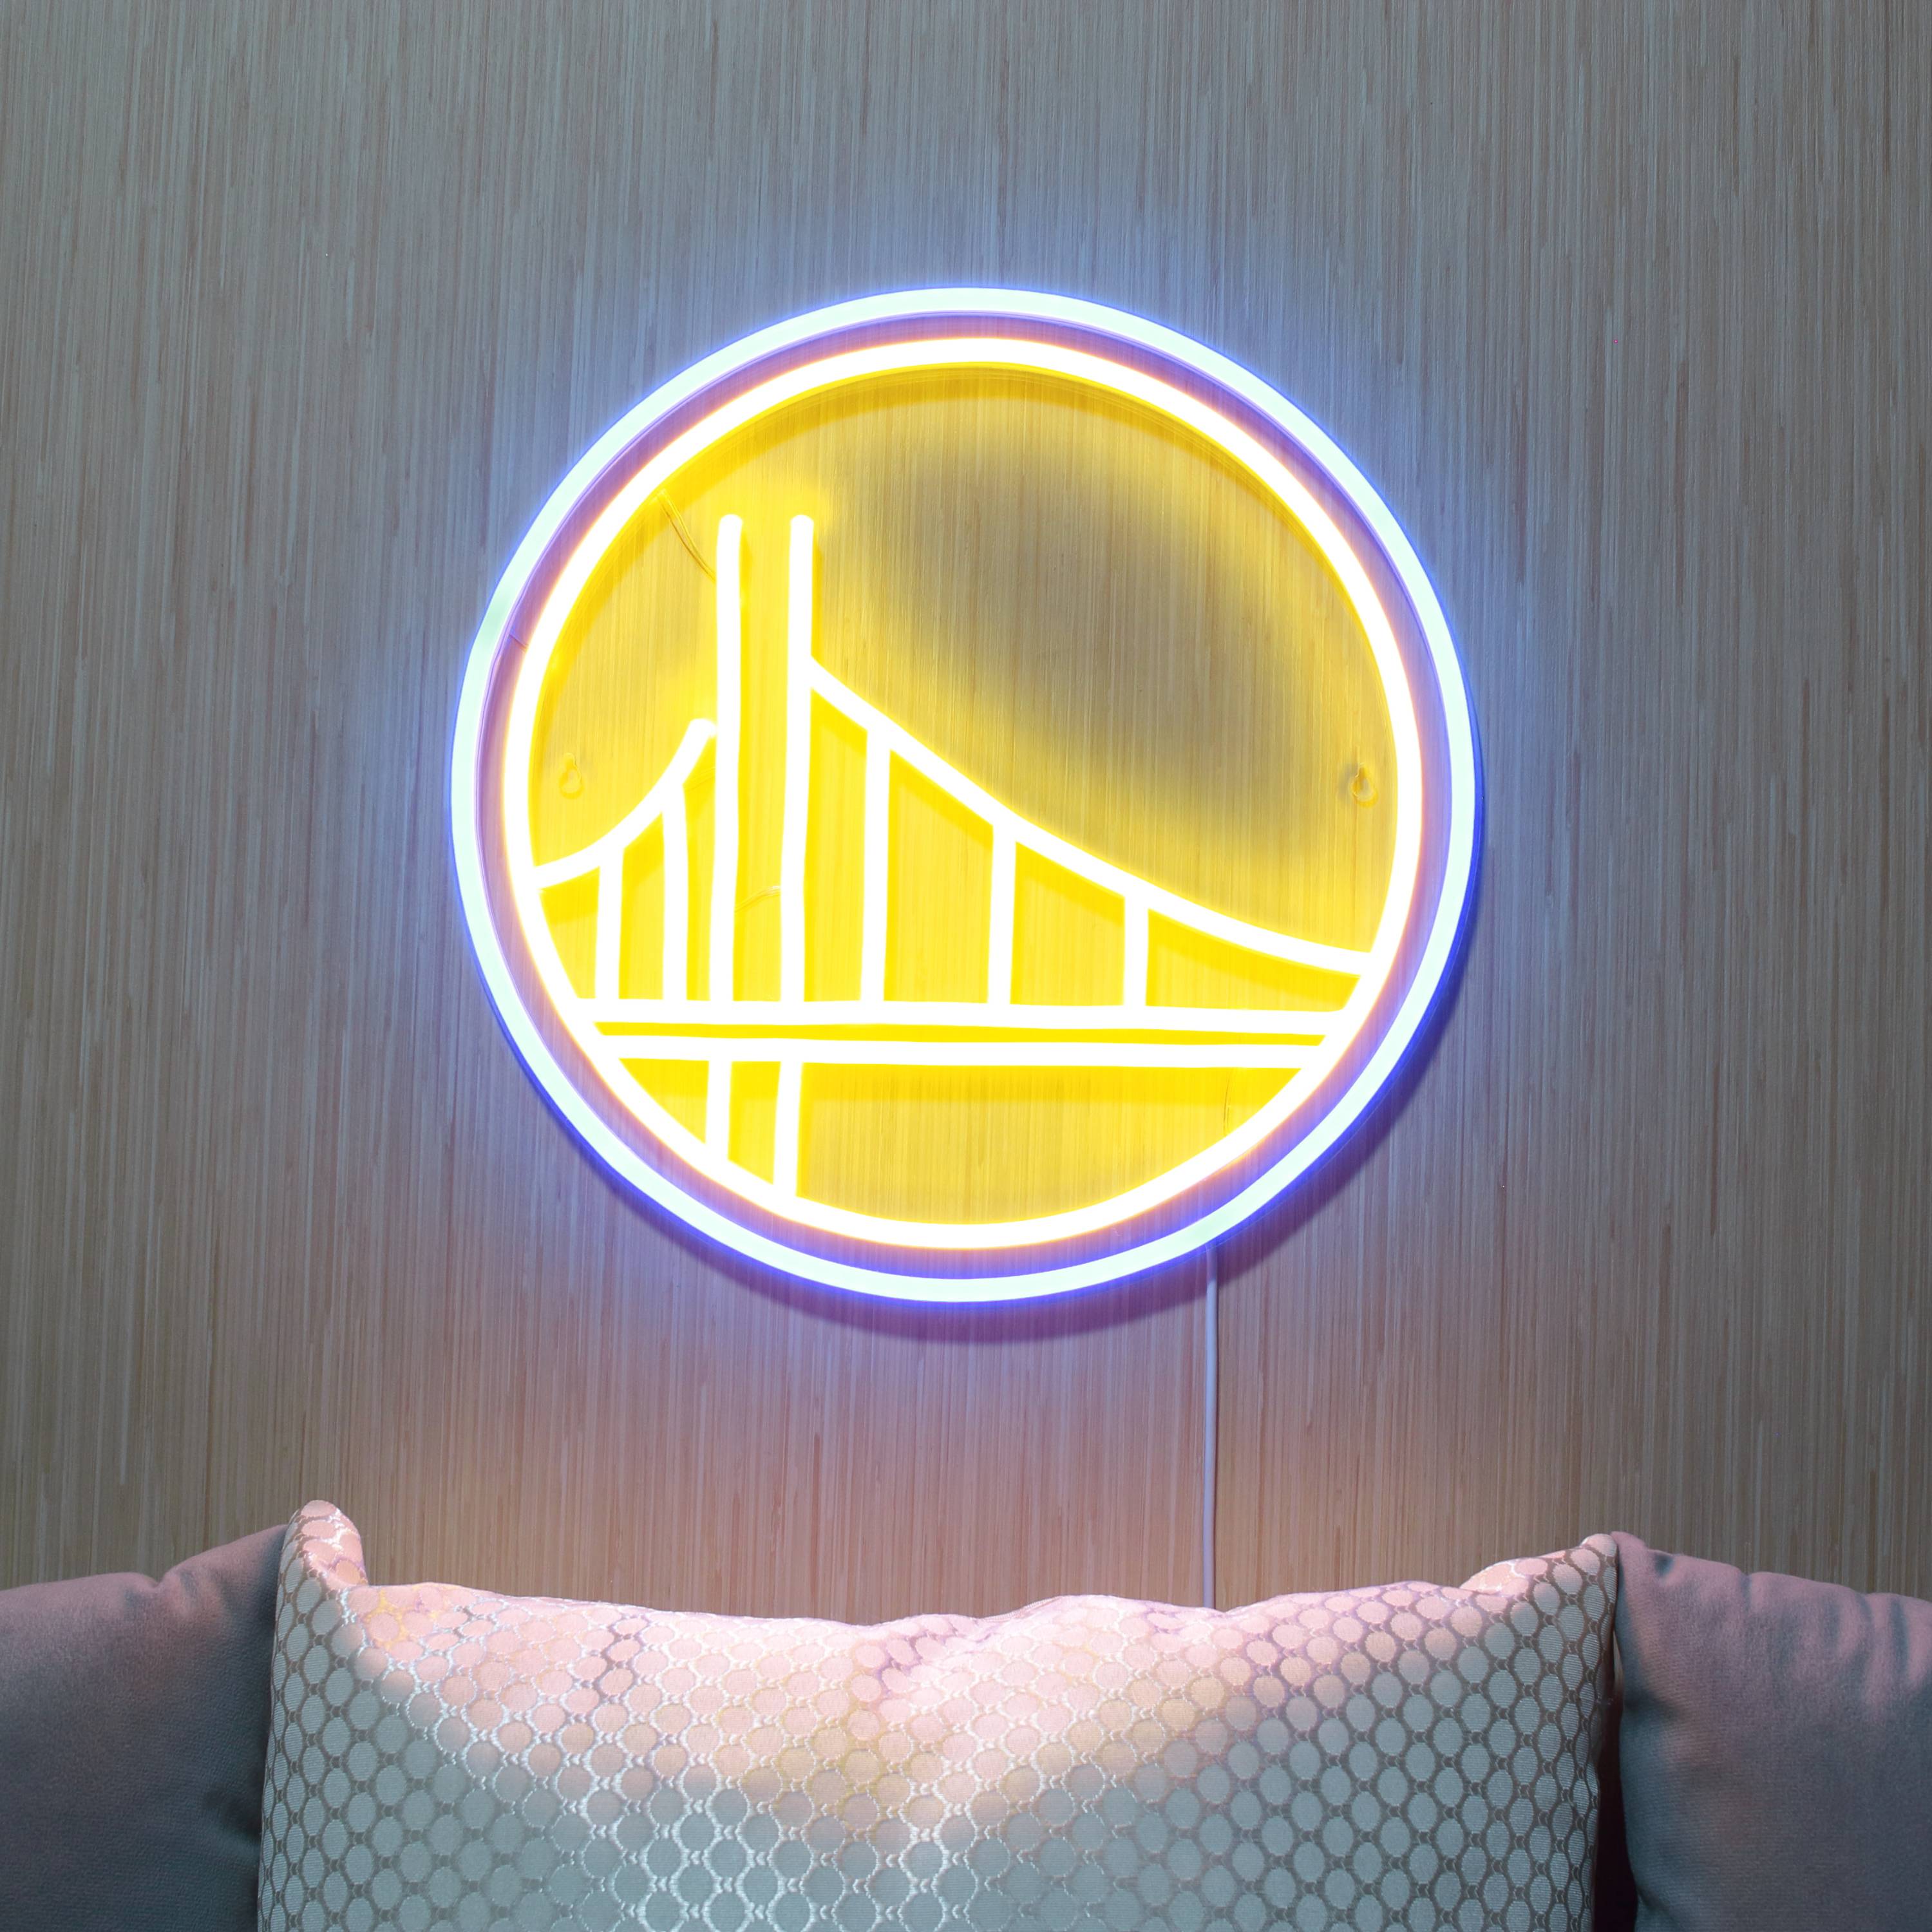 NBA Golden State Warriors Flex Neon LED Sign